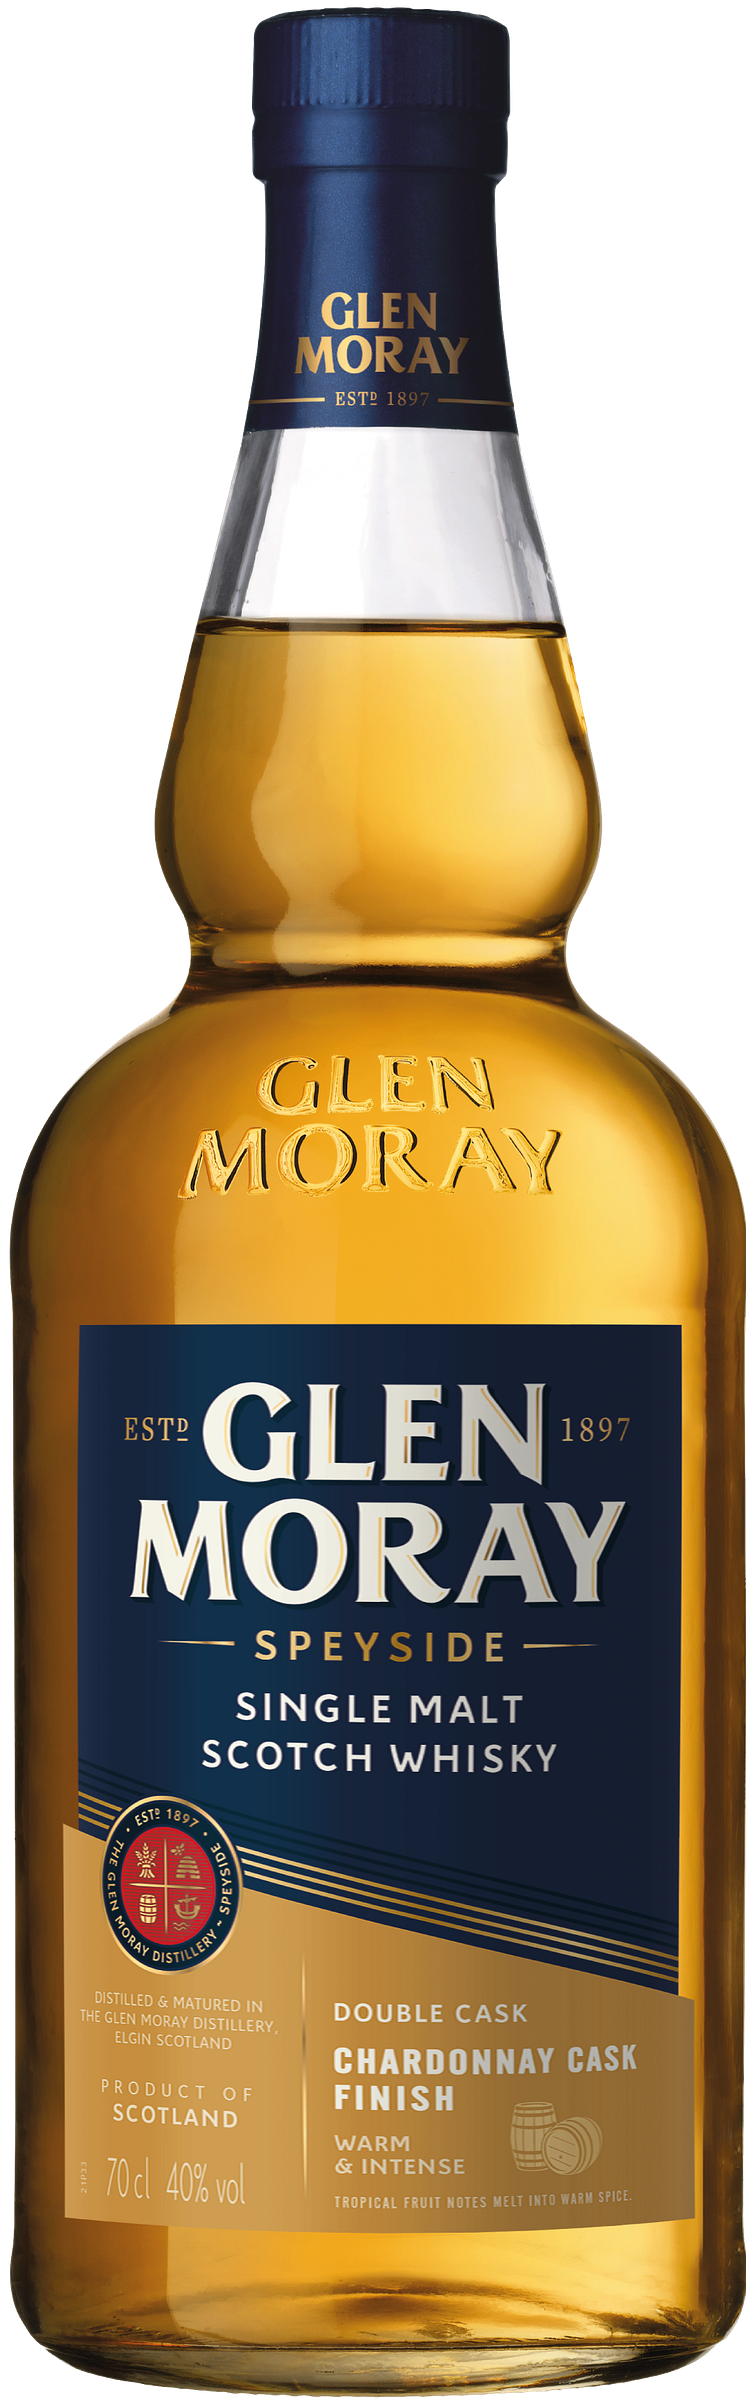 glen-moray-chardonnay-cask-finish-700-ml